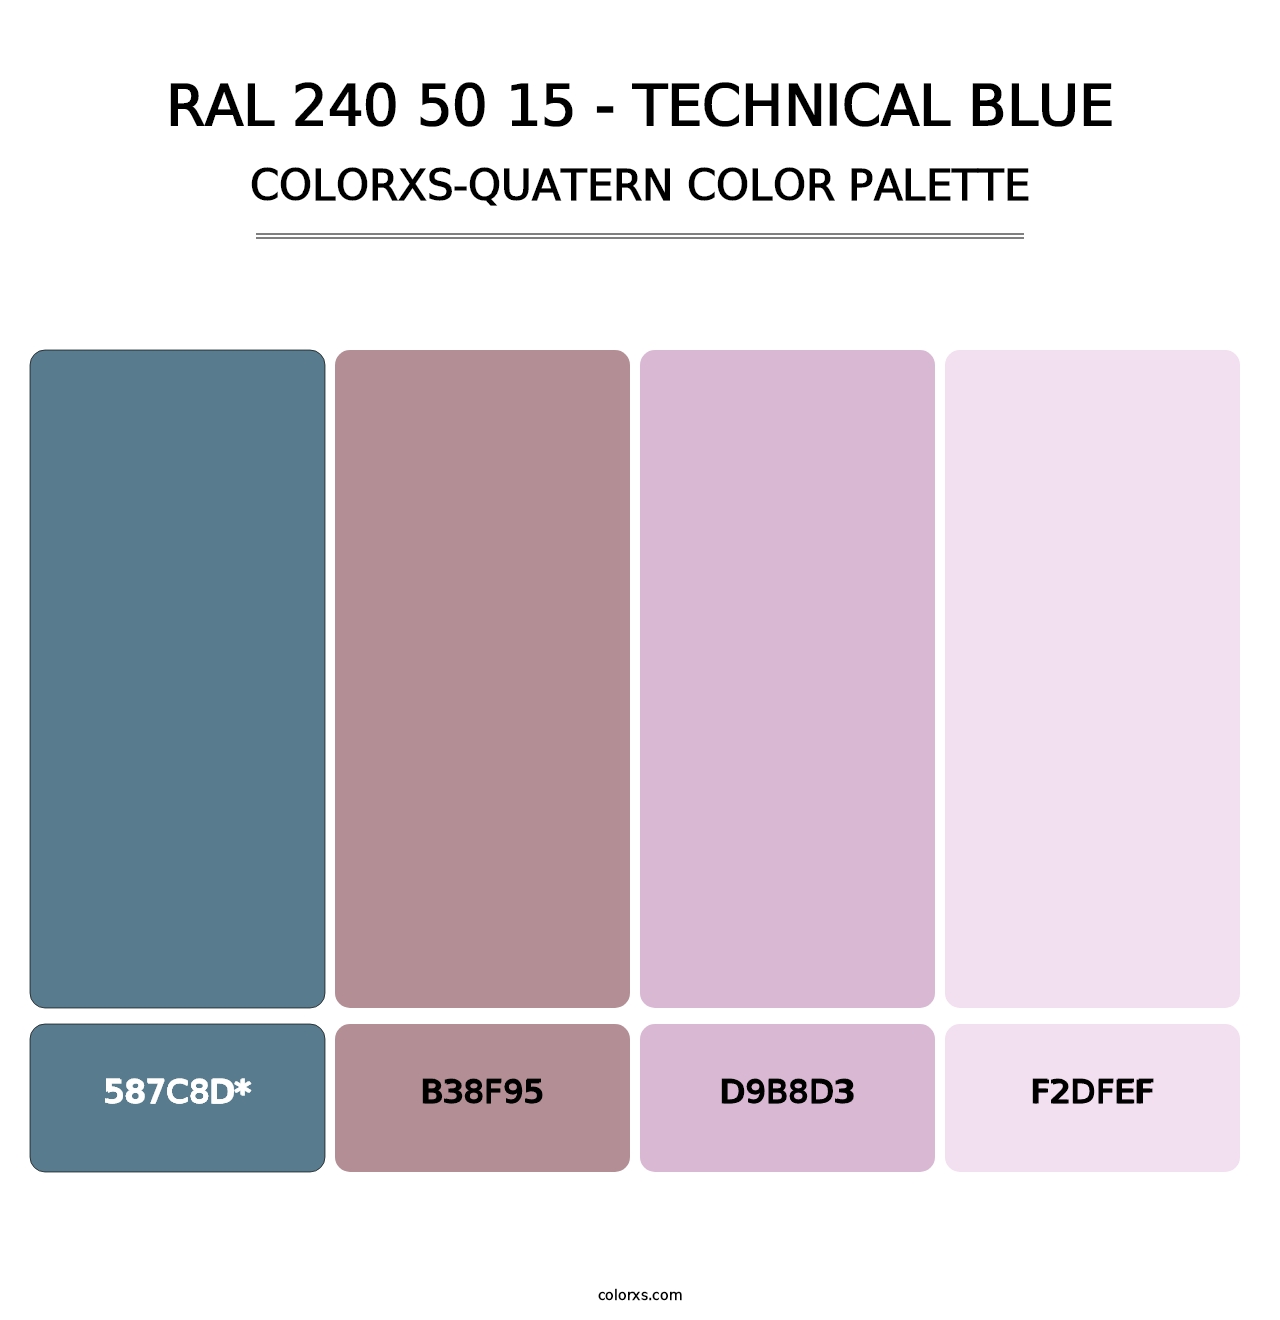 RAL 240 50 15 - Technical Blue - Colorxs Quatern Palette